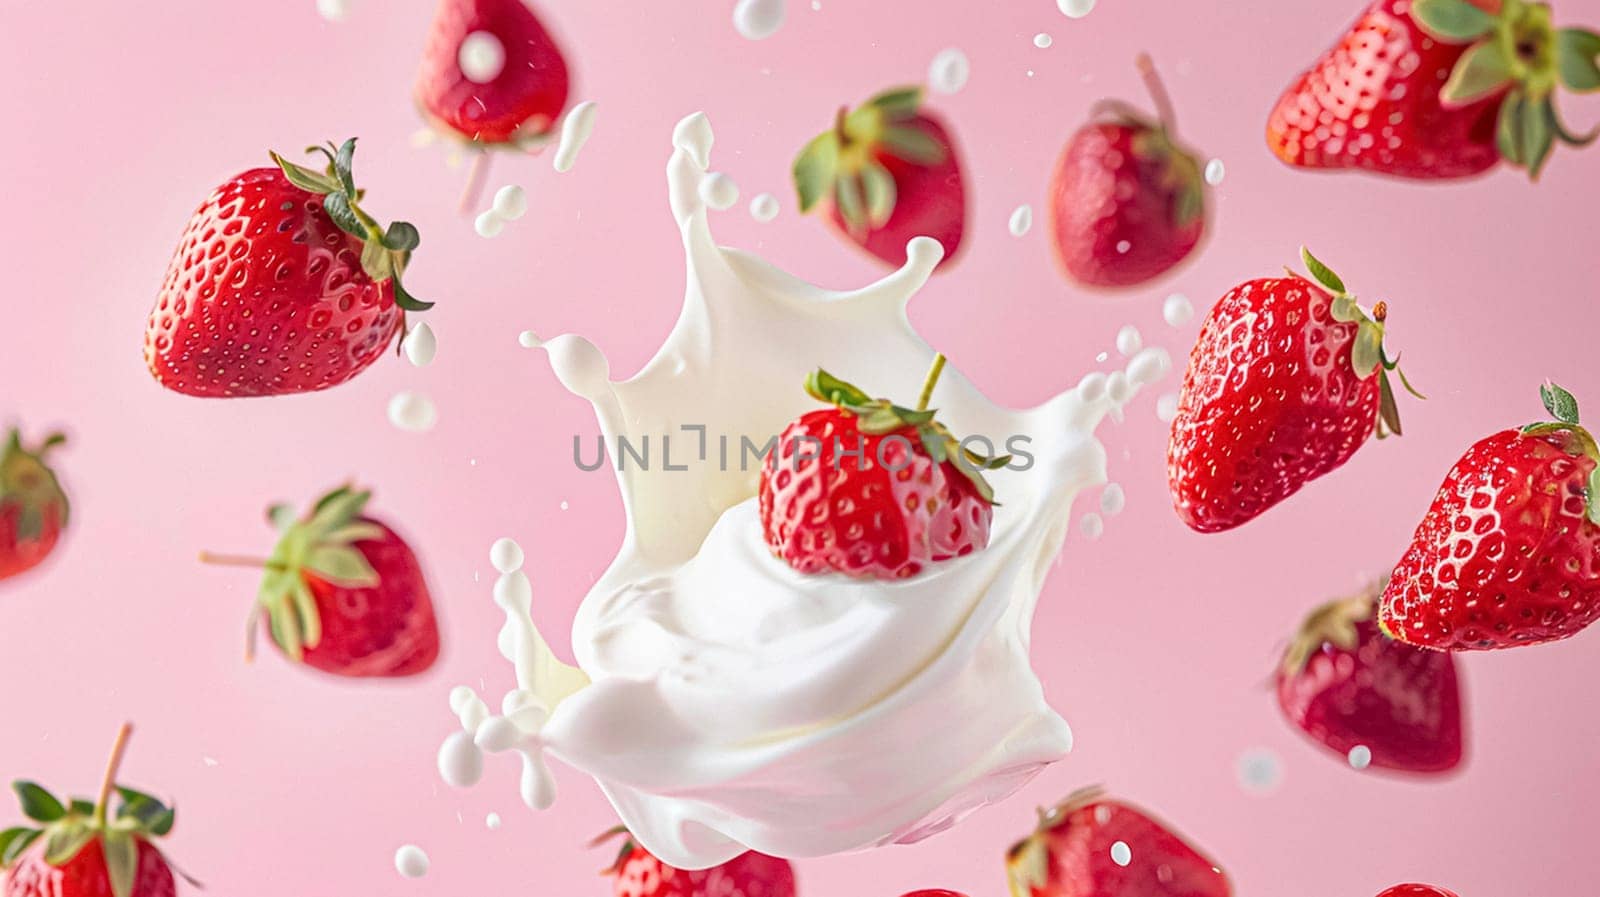 Strawberries falling into cream, milk or yoghurt on pink background, strawberry dessert